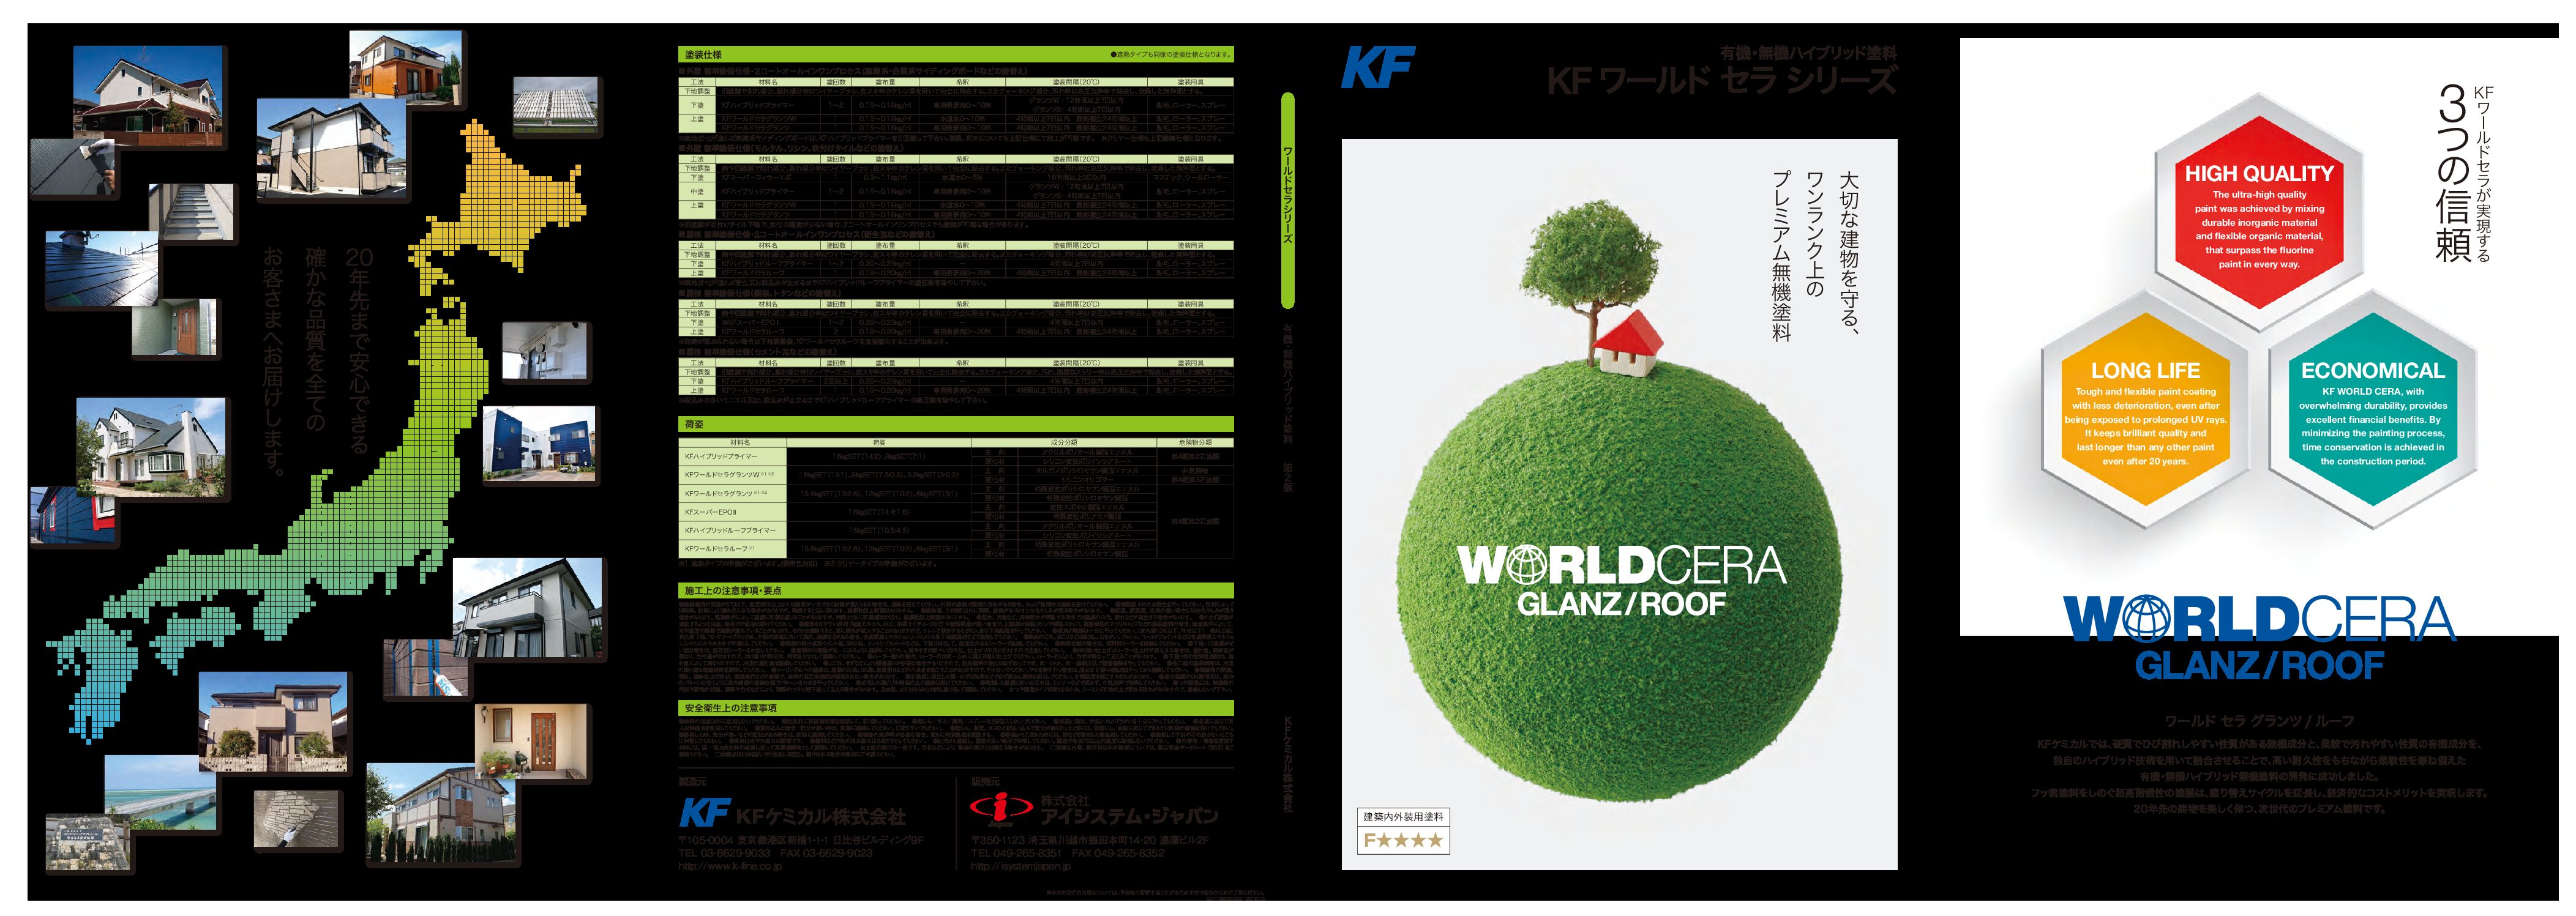 kf_worldcera_catalog